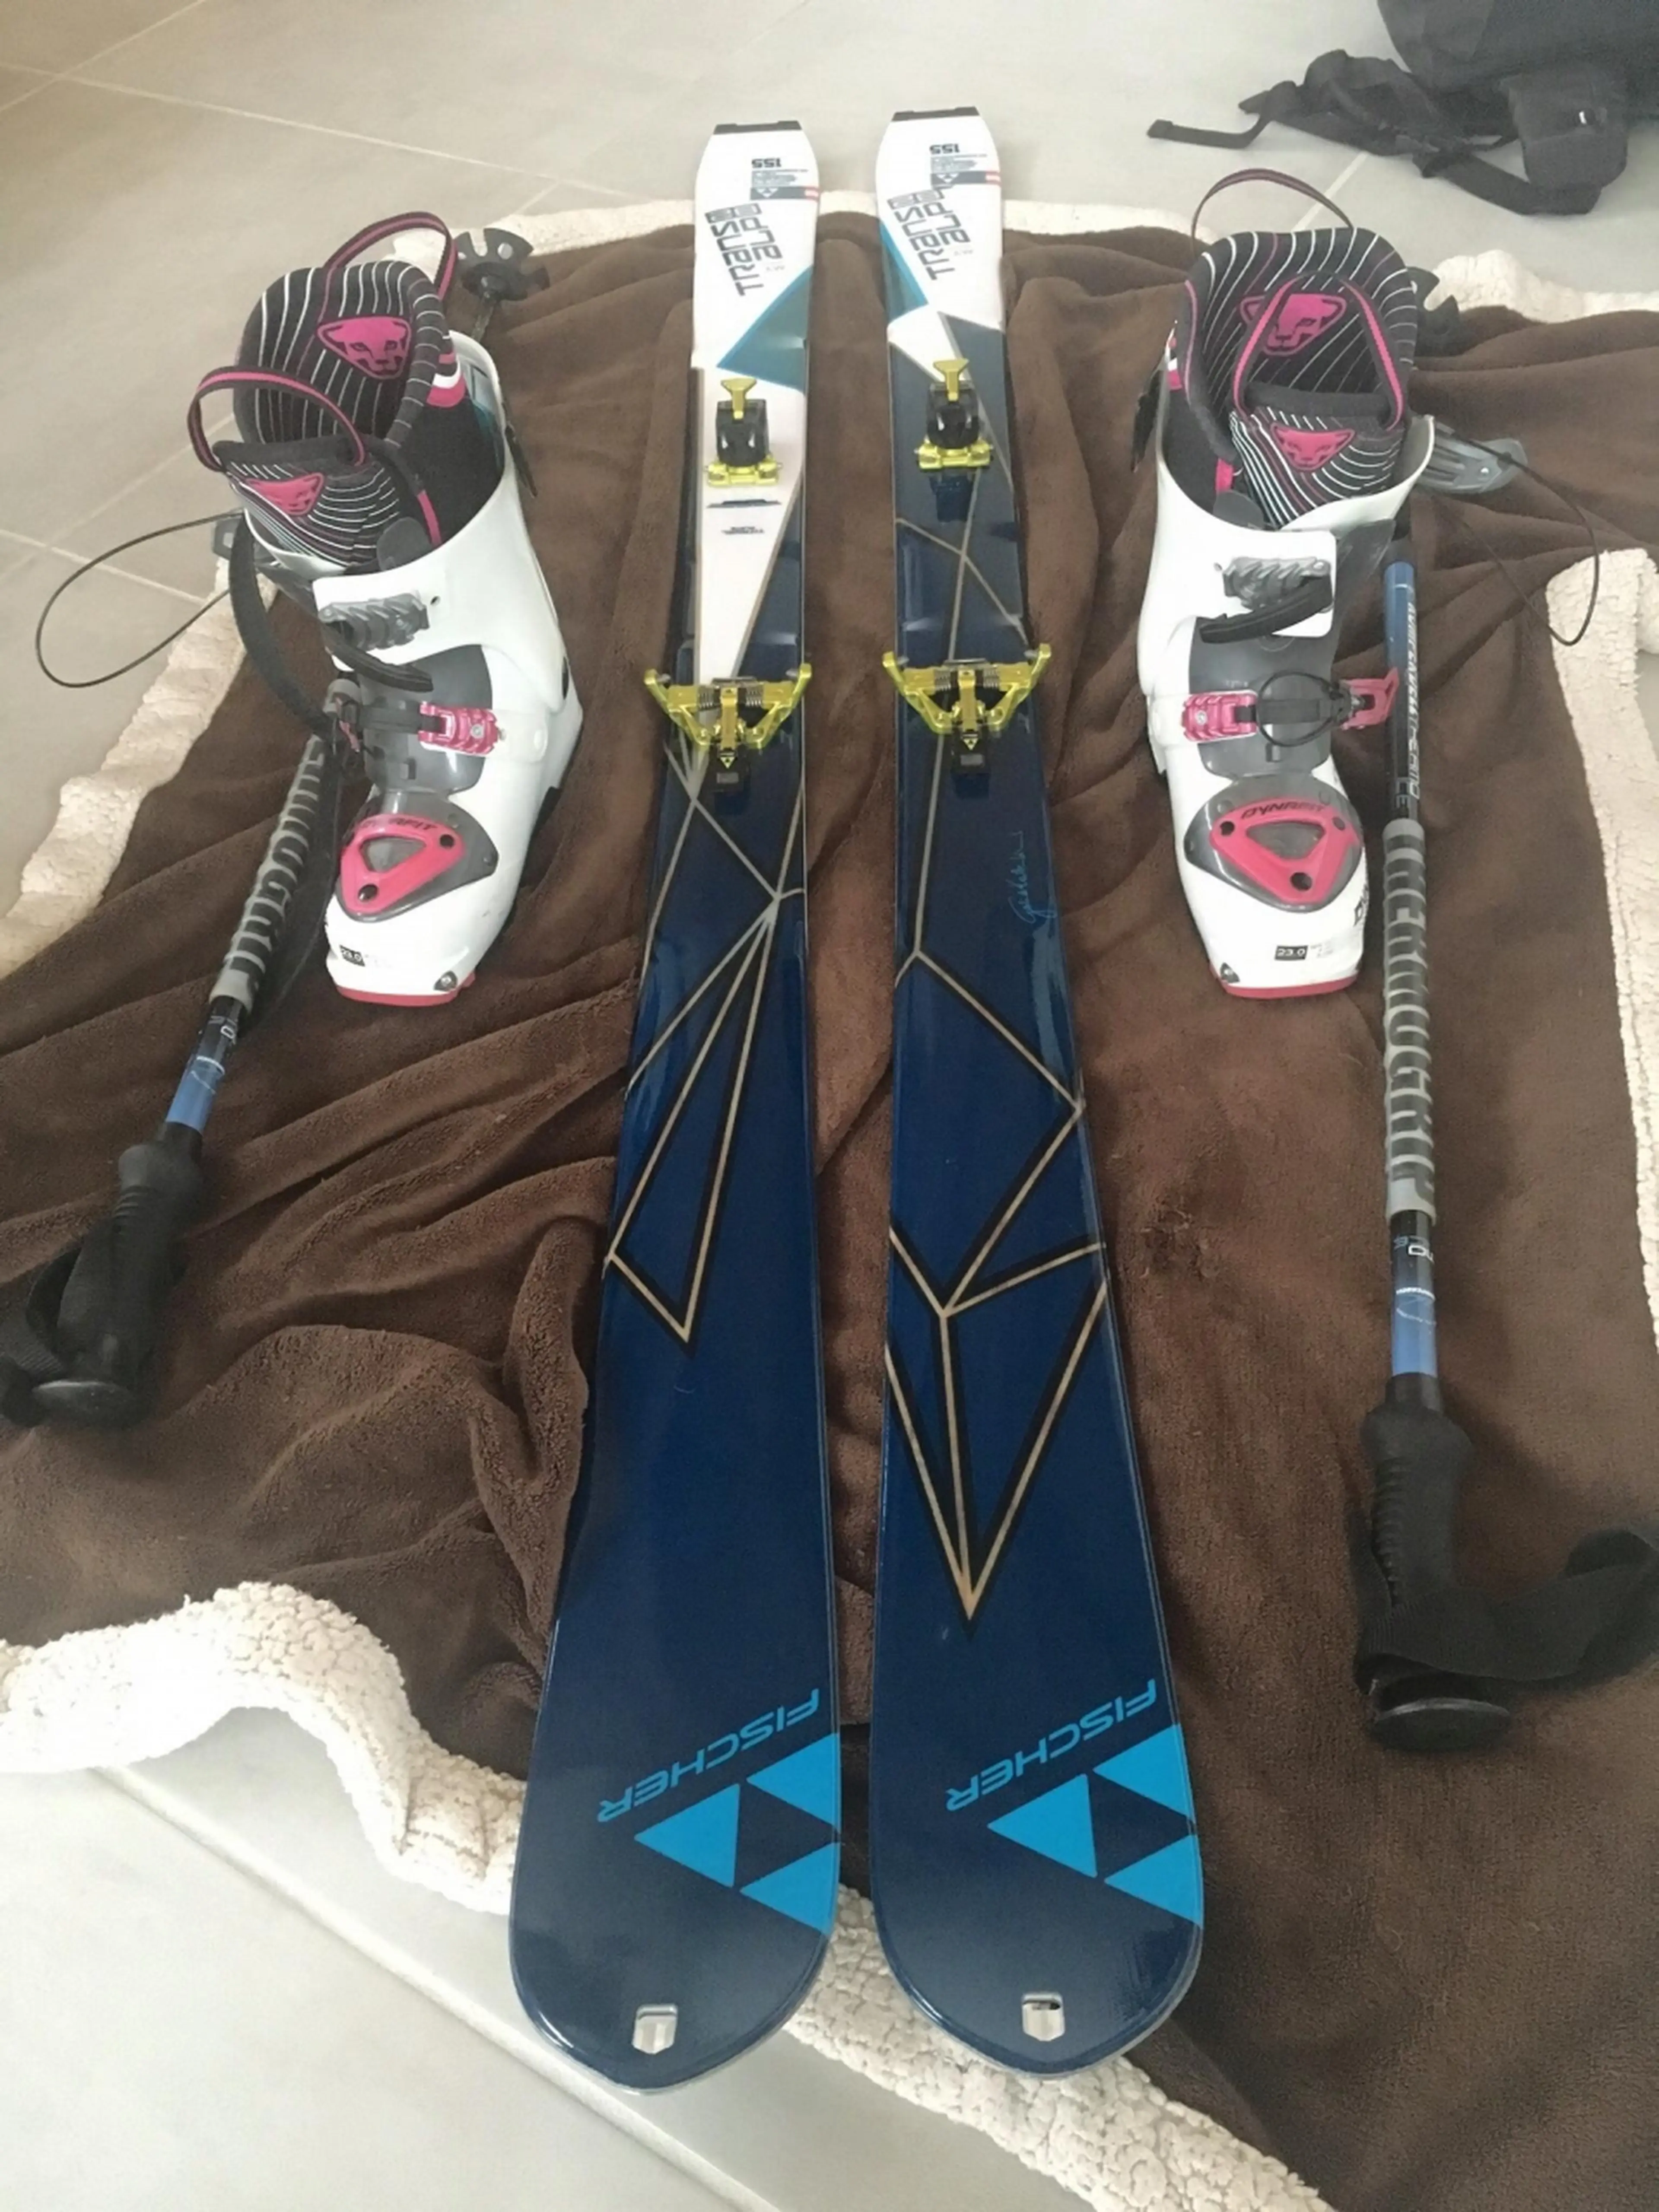 6. Echipament ski de tura